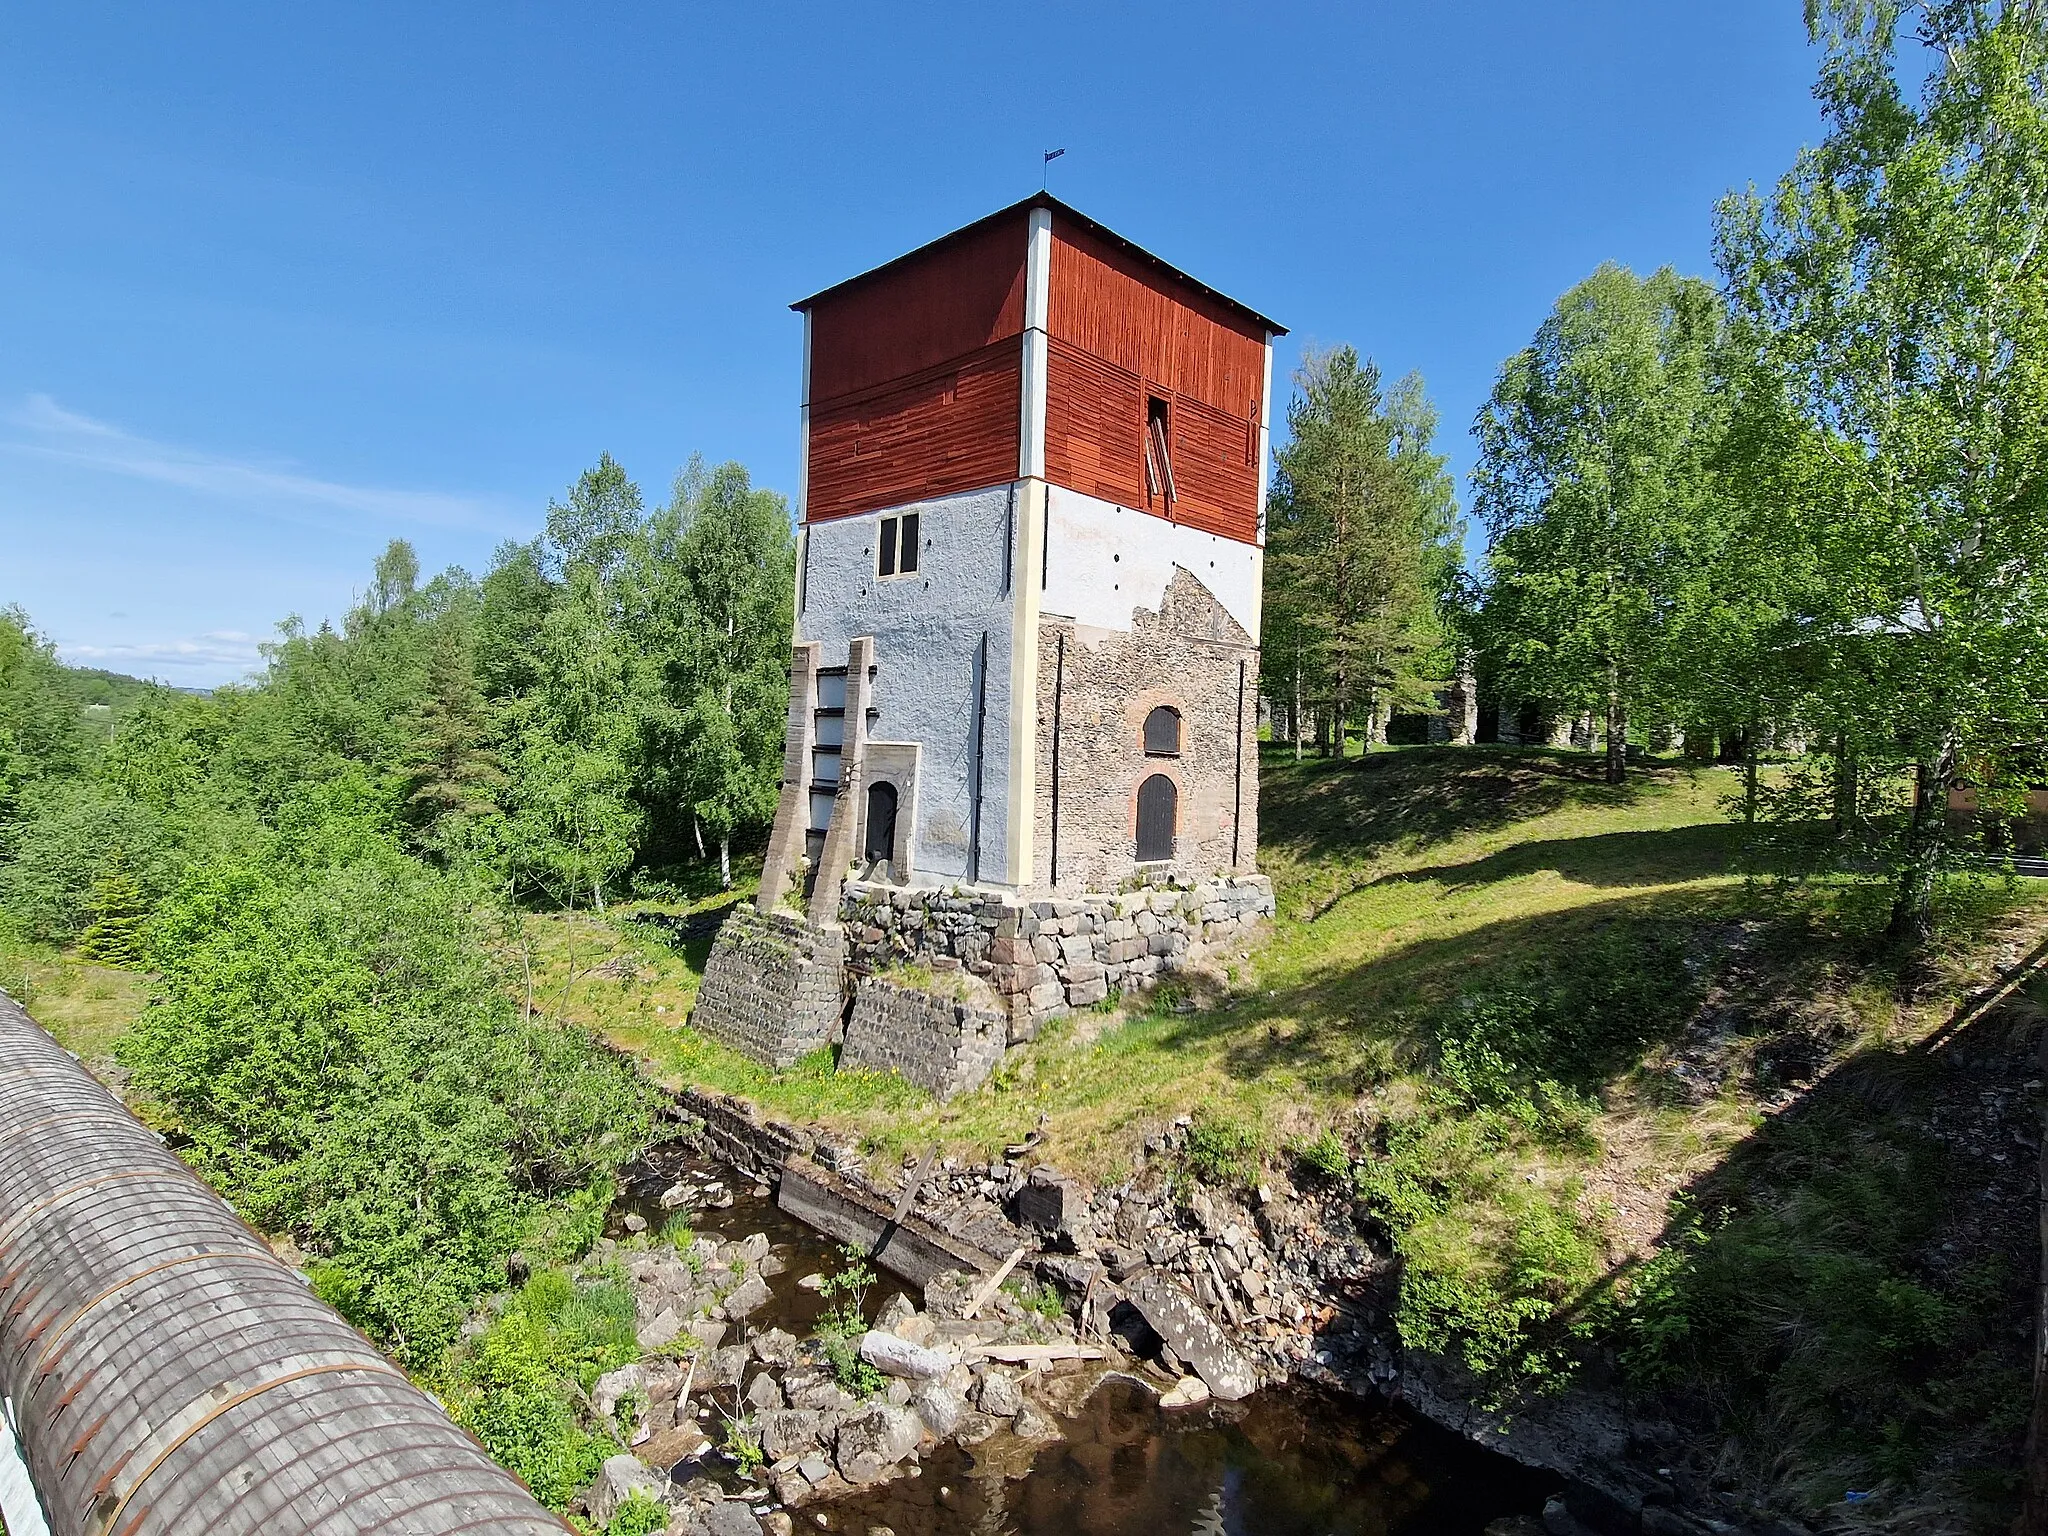 Photo showing: Old iron works of Ulvshyttan, Säter municipality, Sweden